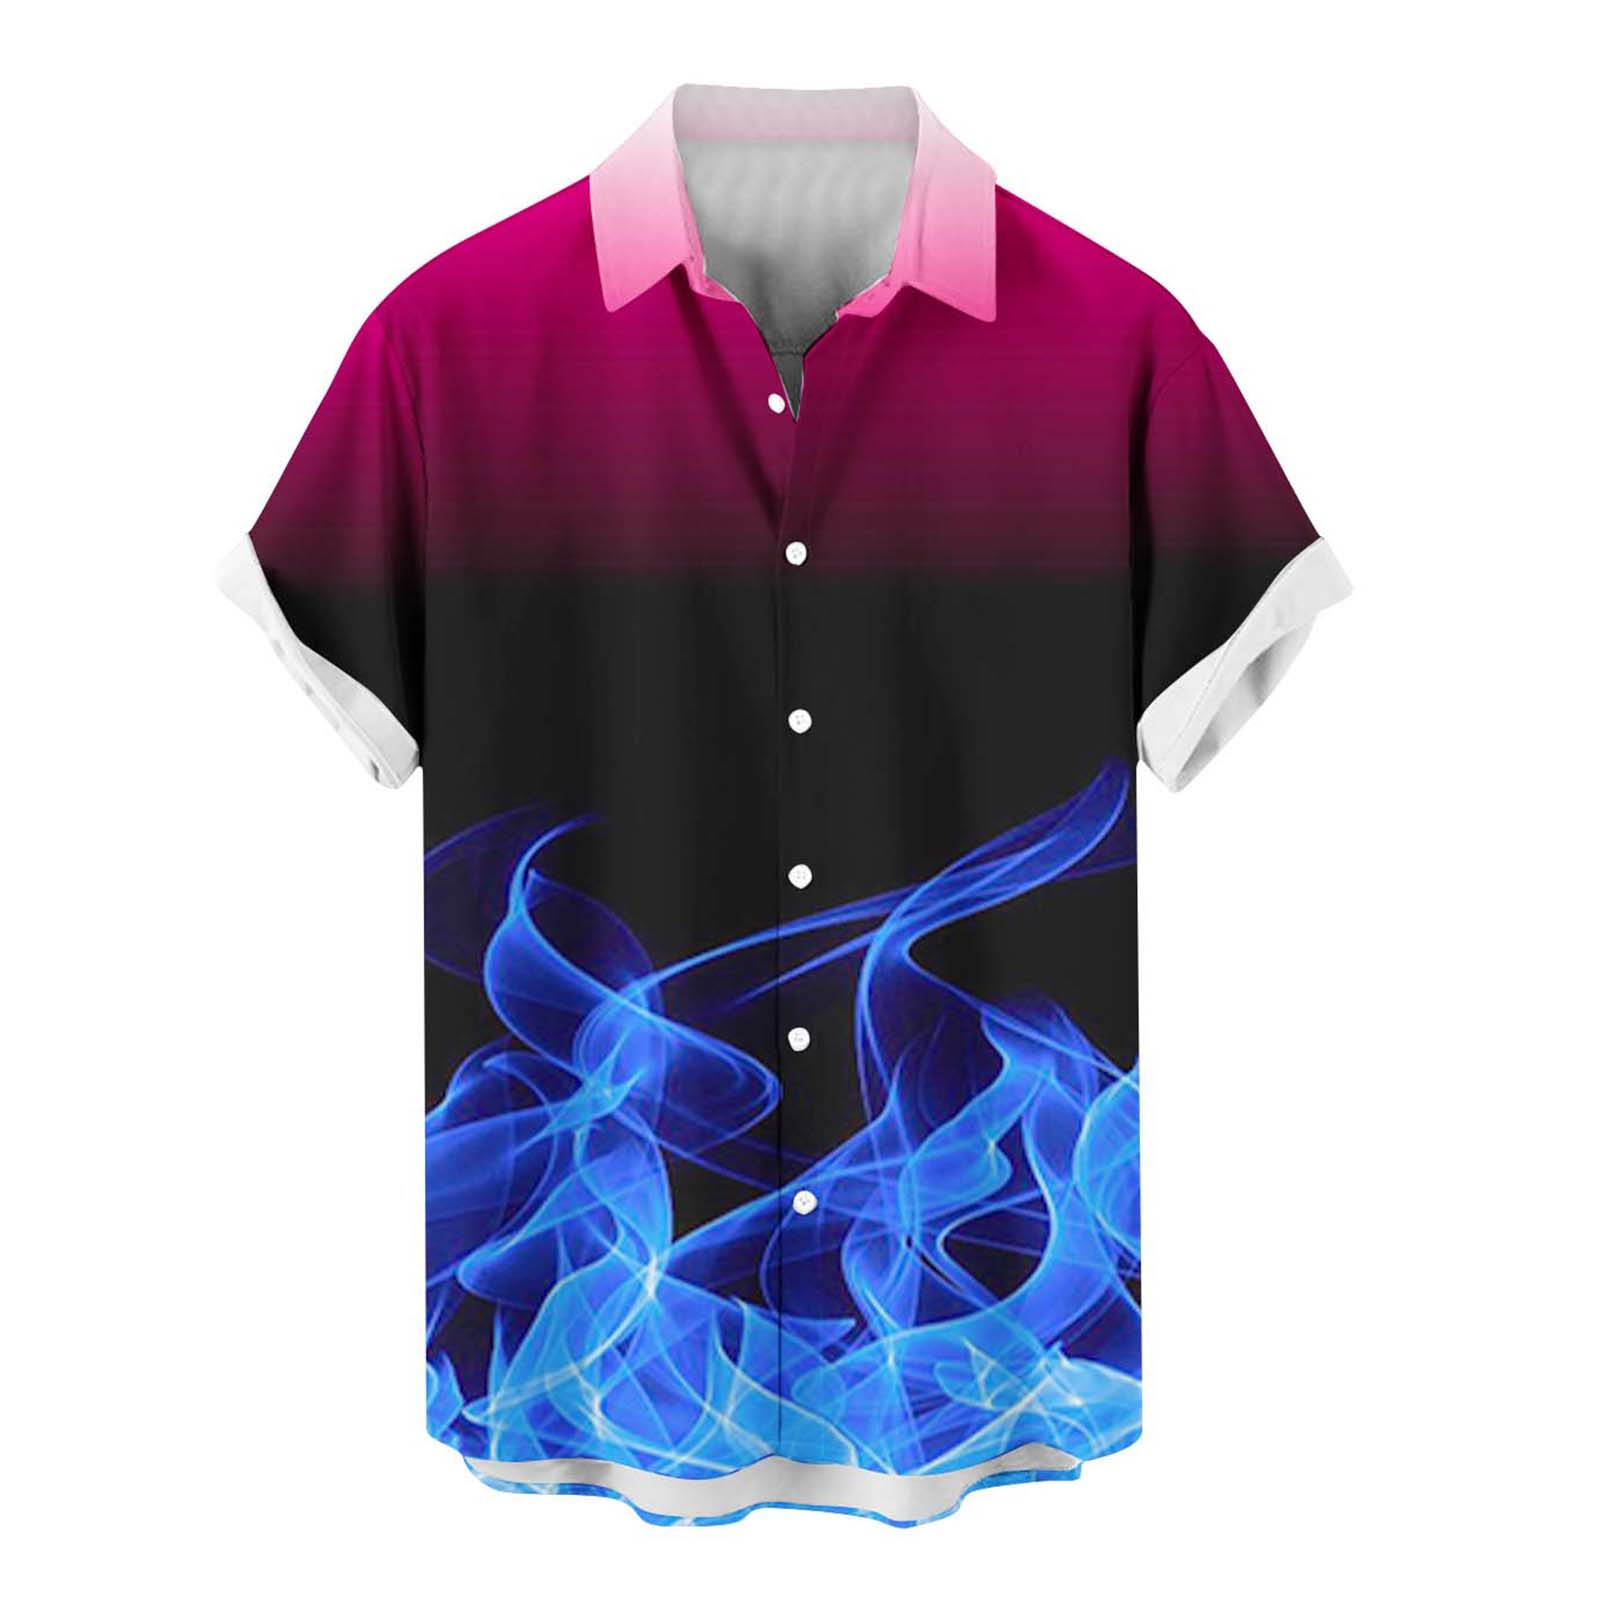 QIPOPIQ Men's Short Sleeve Turndown Collar Shirts Men 3D Fire Pattern Hawaiian Shirt Summer Fashion Printed Have Pockets Button Shirt Tops Tees Shirt Gift for Father & Him 2023 Deals Blue L - image 1 of 4